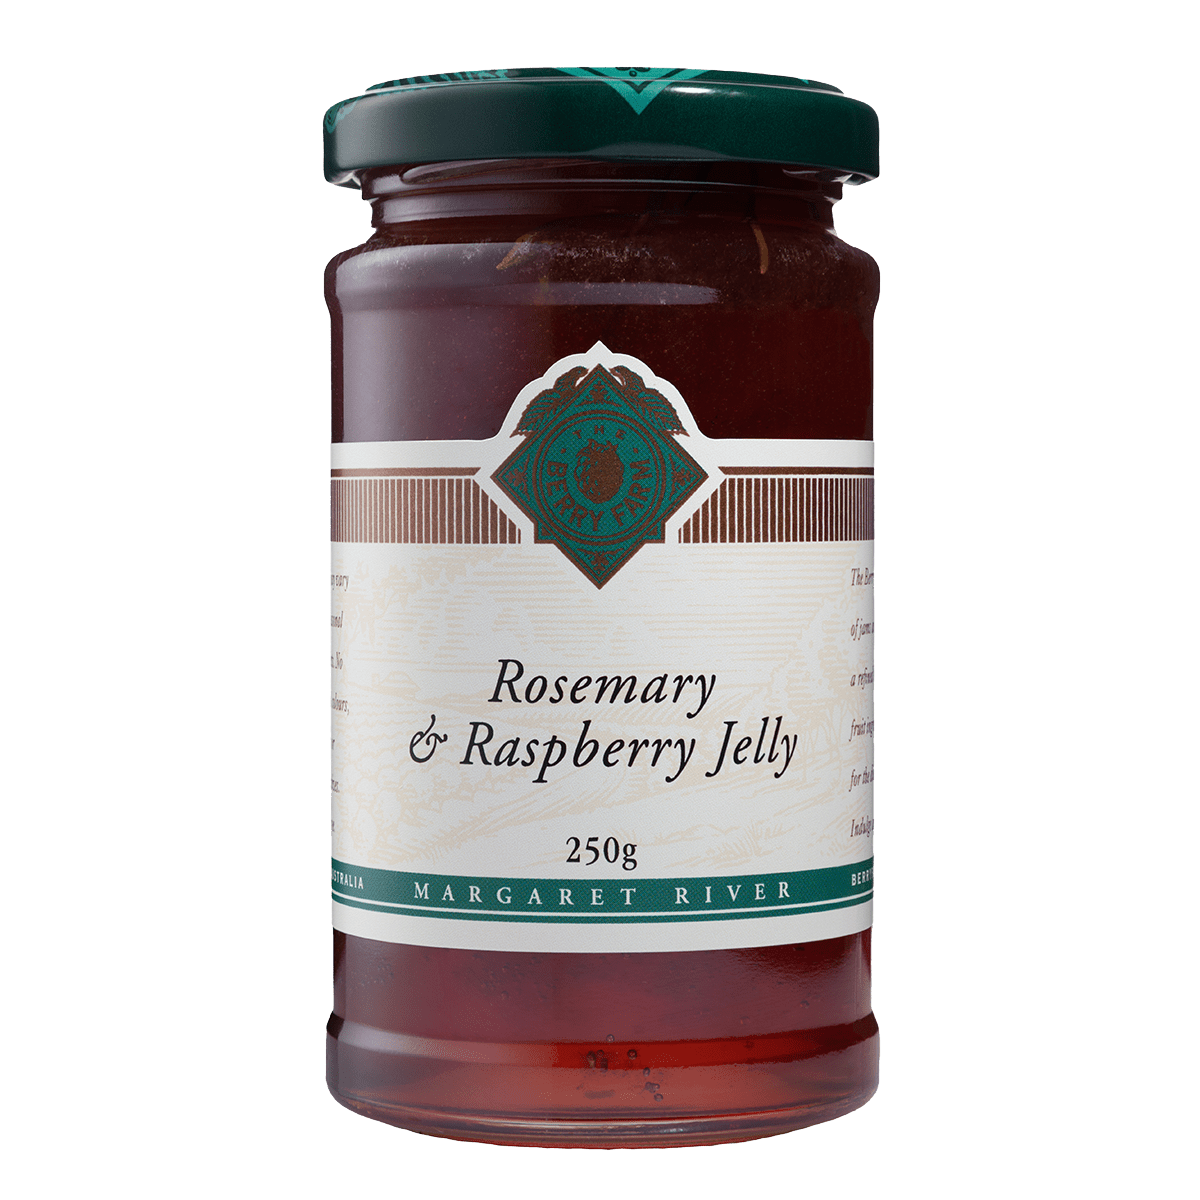 A jar of Rosemary & Raspberry Jelly